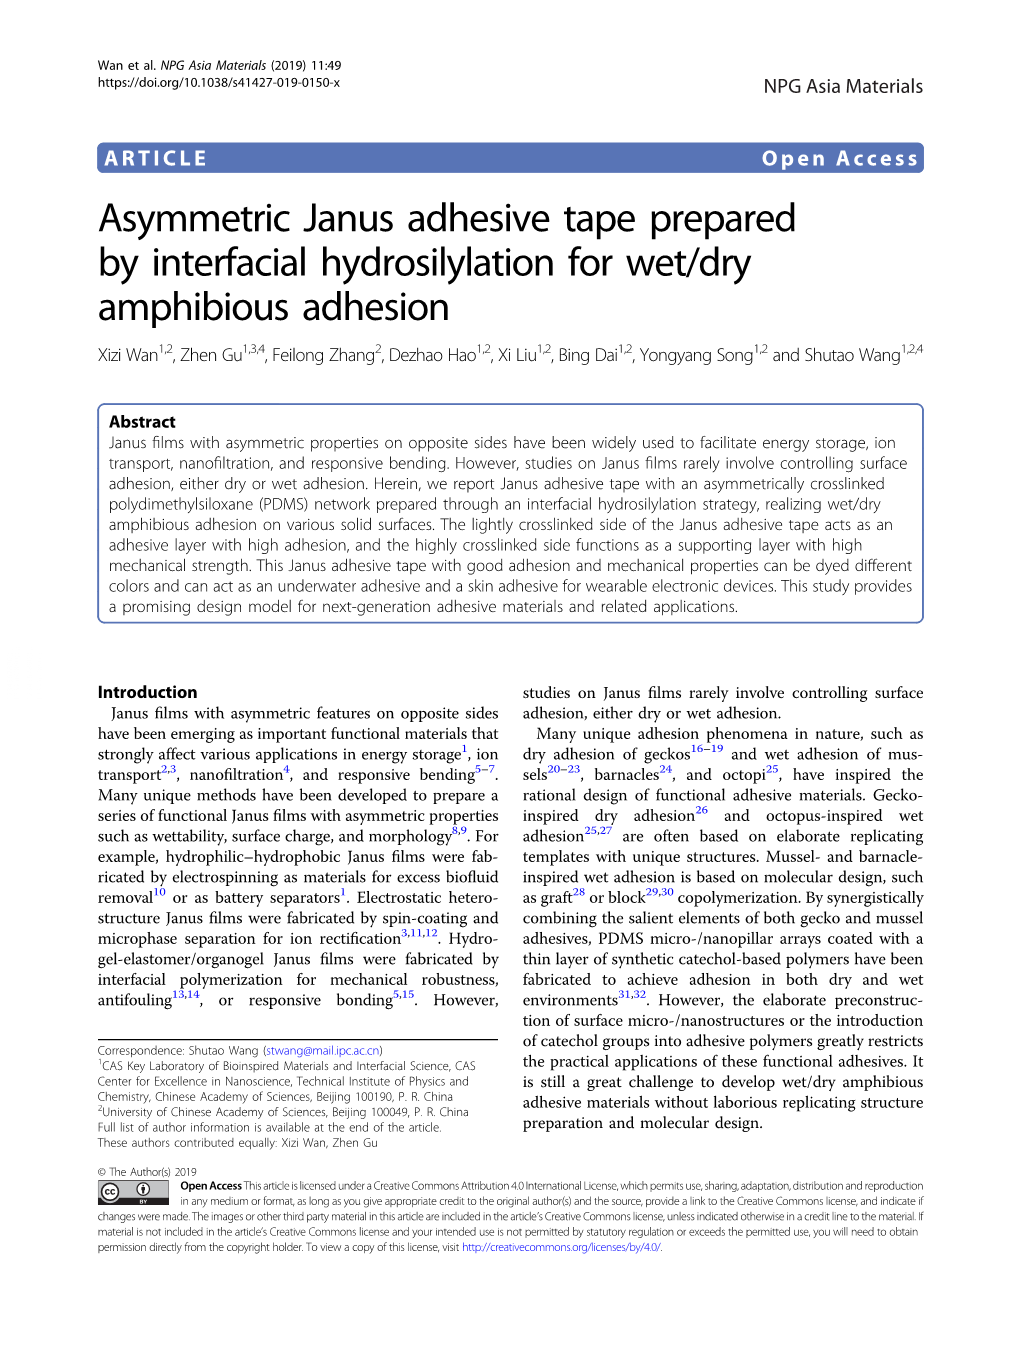 Asymmetric Janus Adhesive Tape Prepared by Interfacial